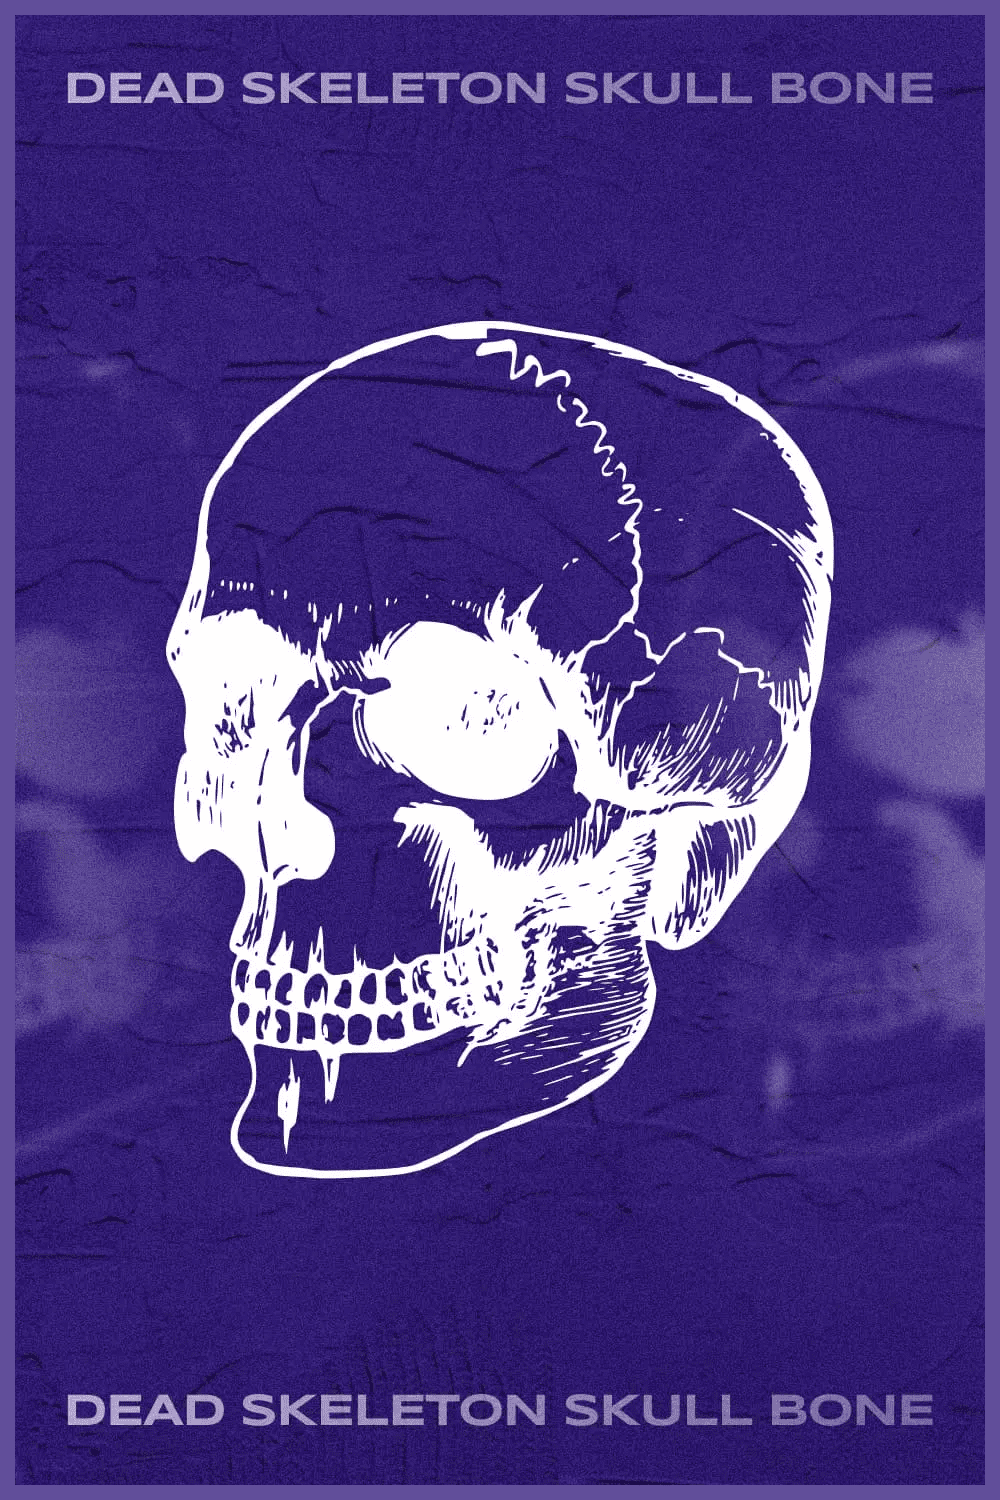 White skull on purple background.